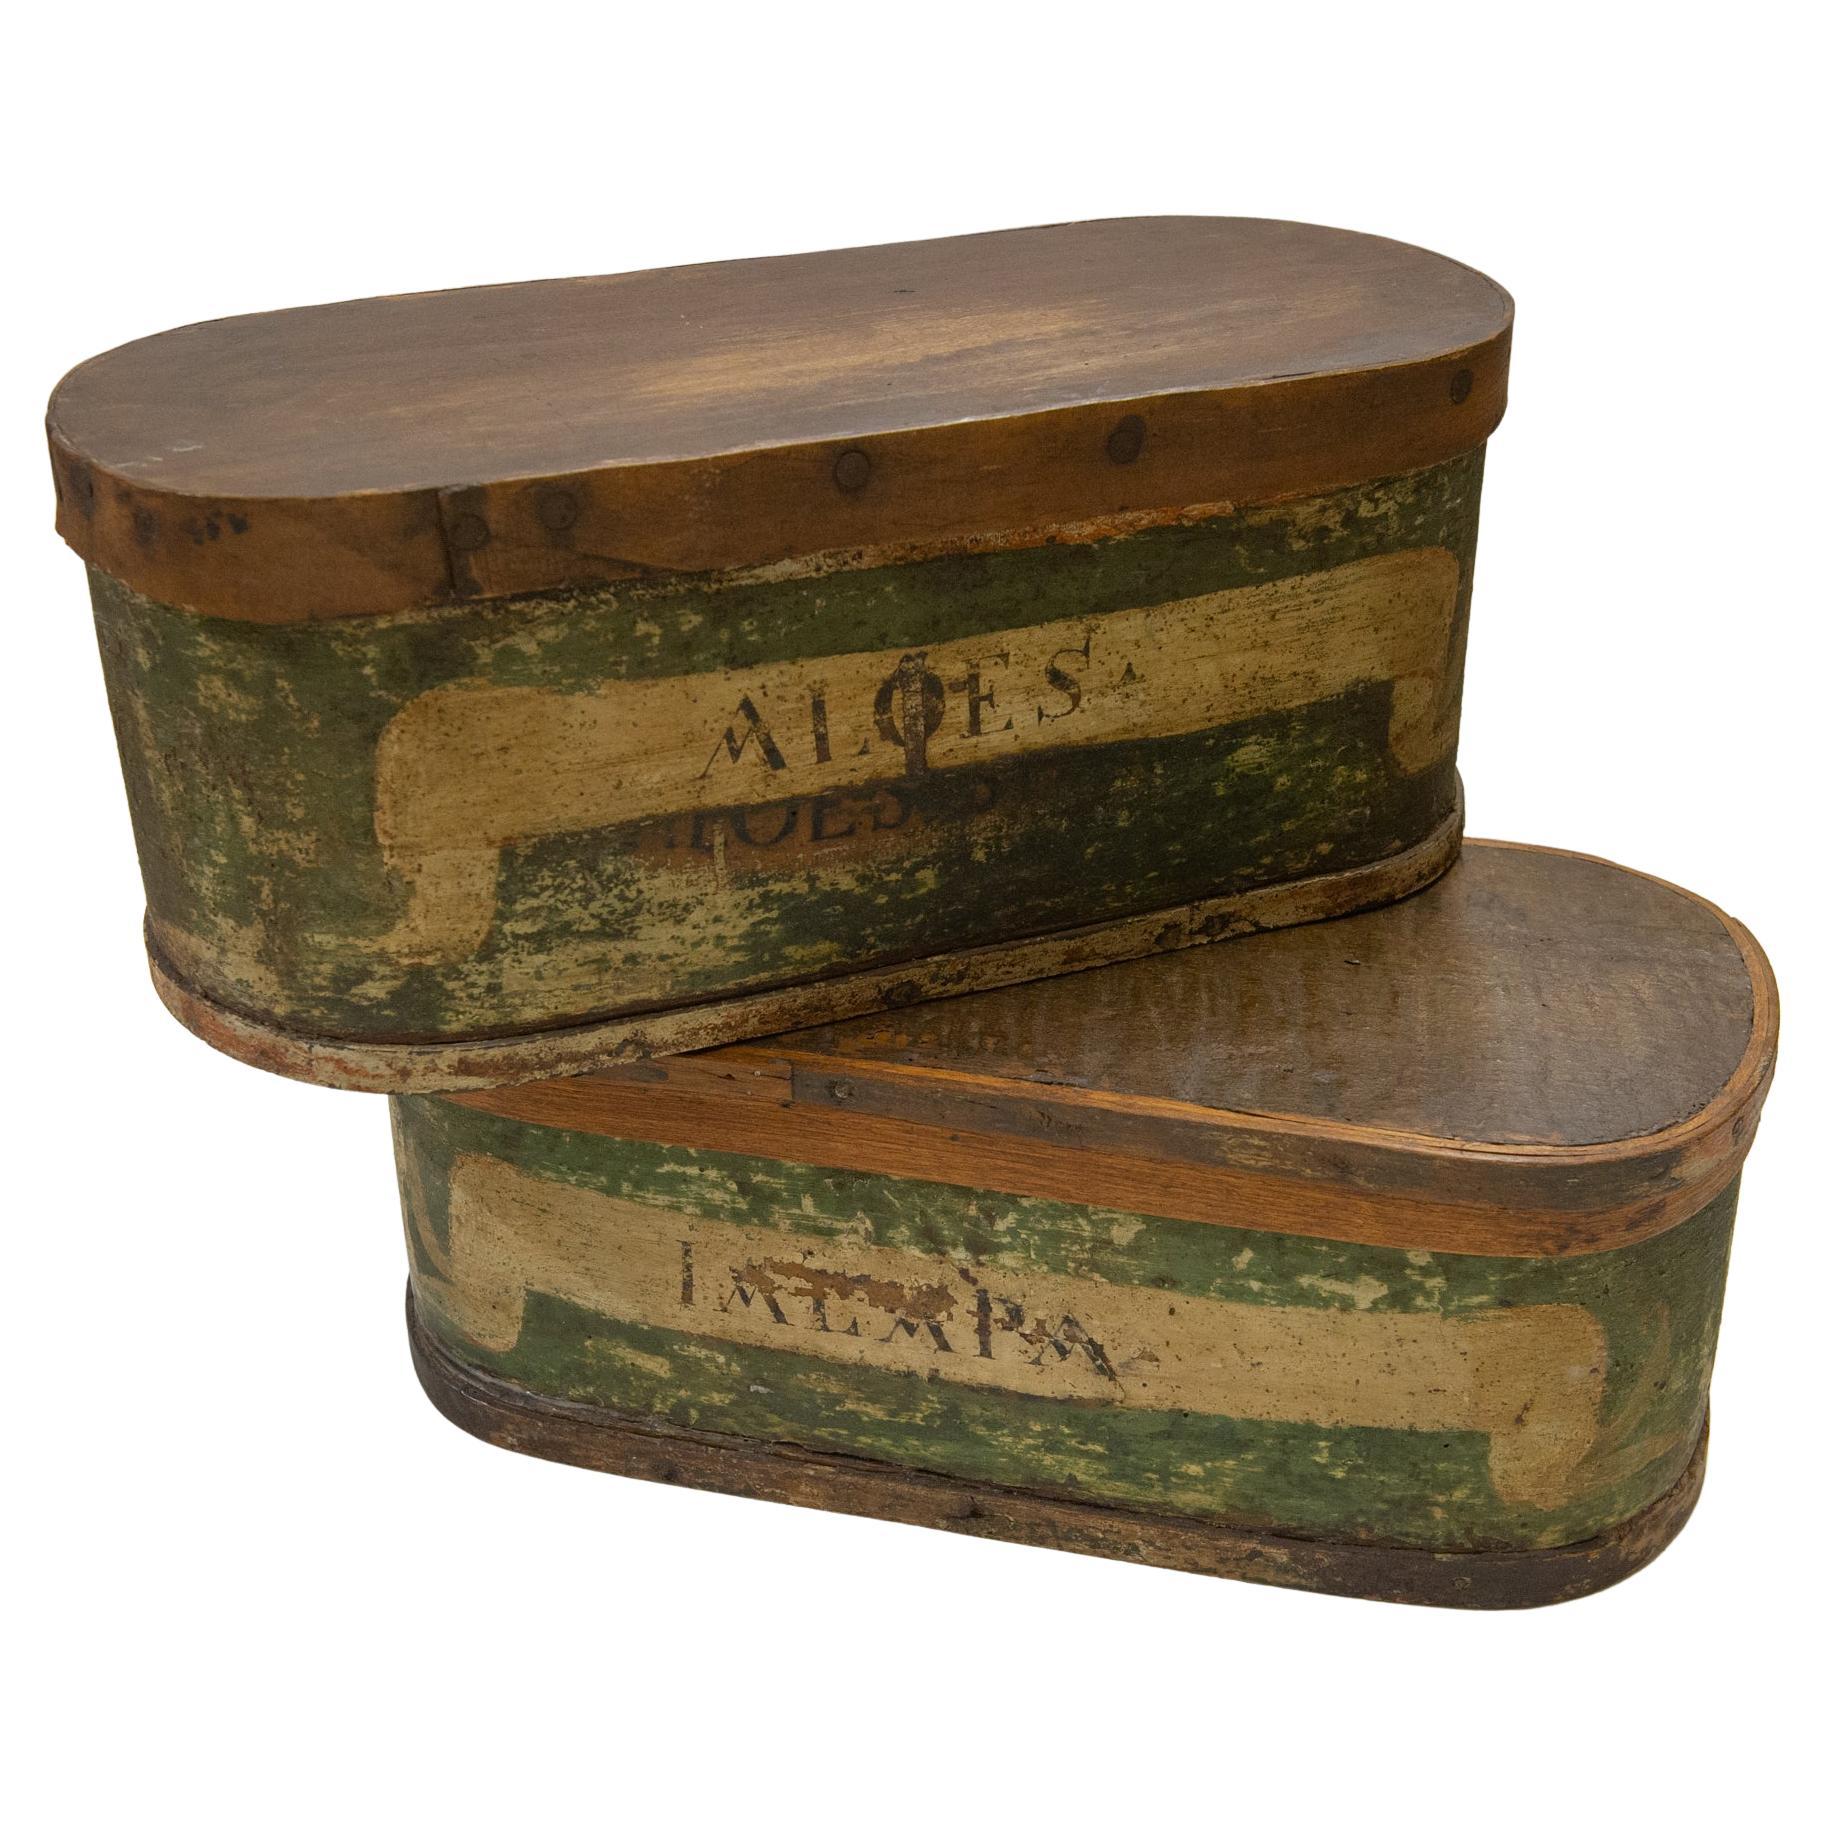 Ein Paar ovale Apotheker- oder Pharmacy-Schachteln aus Holz